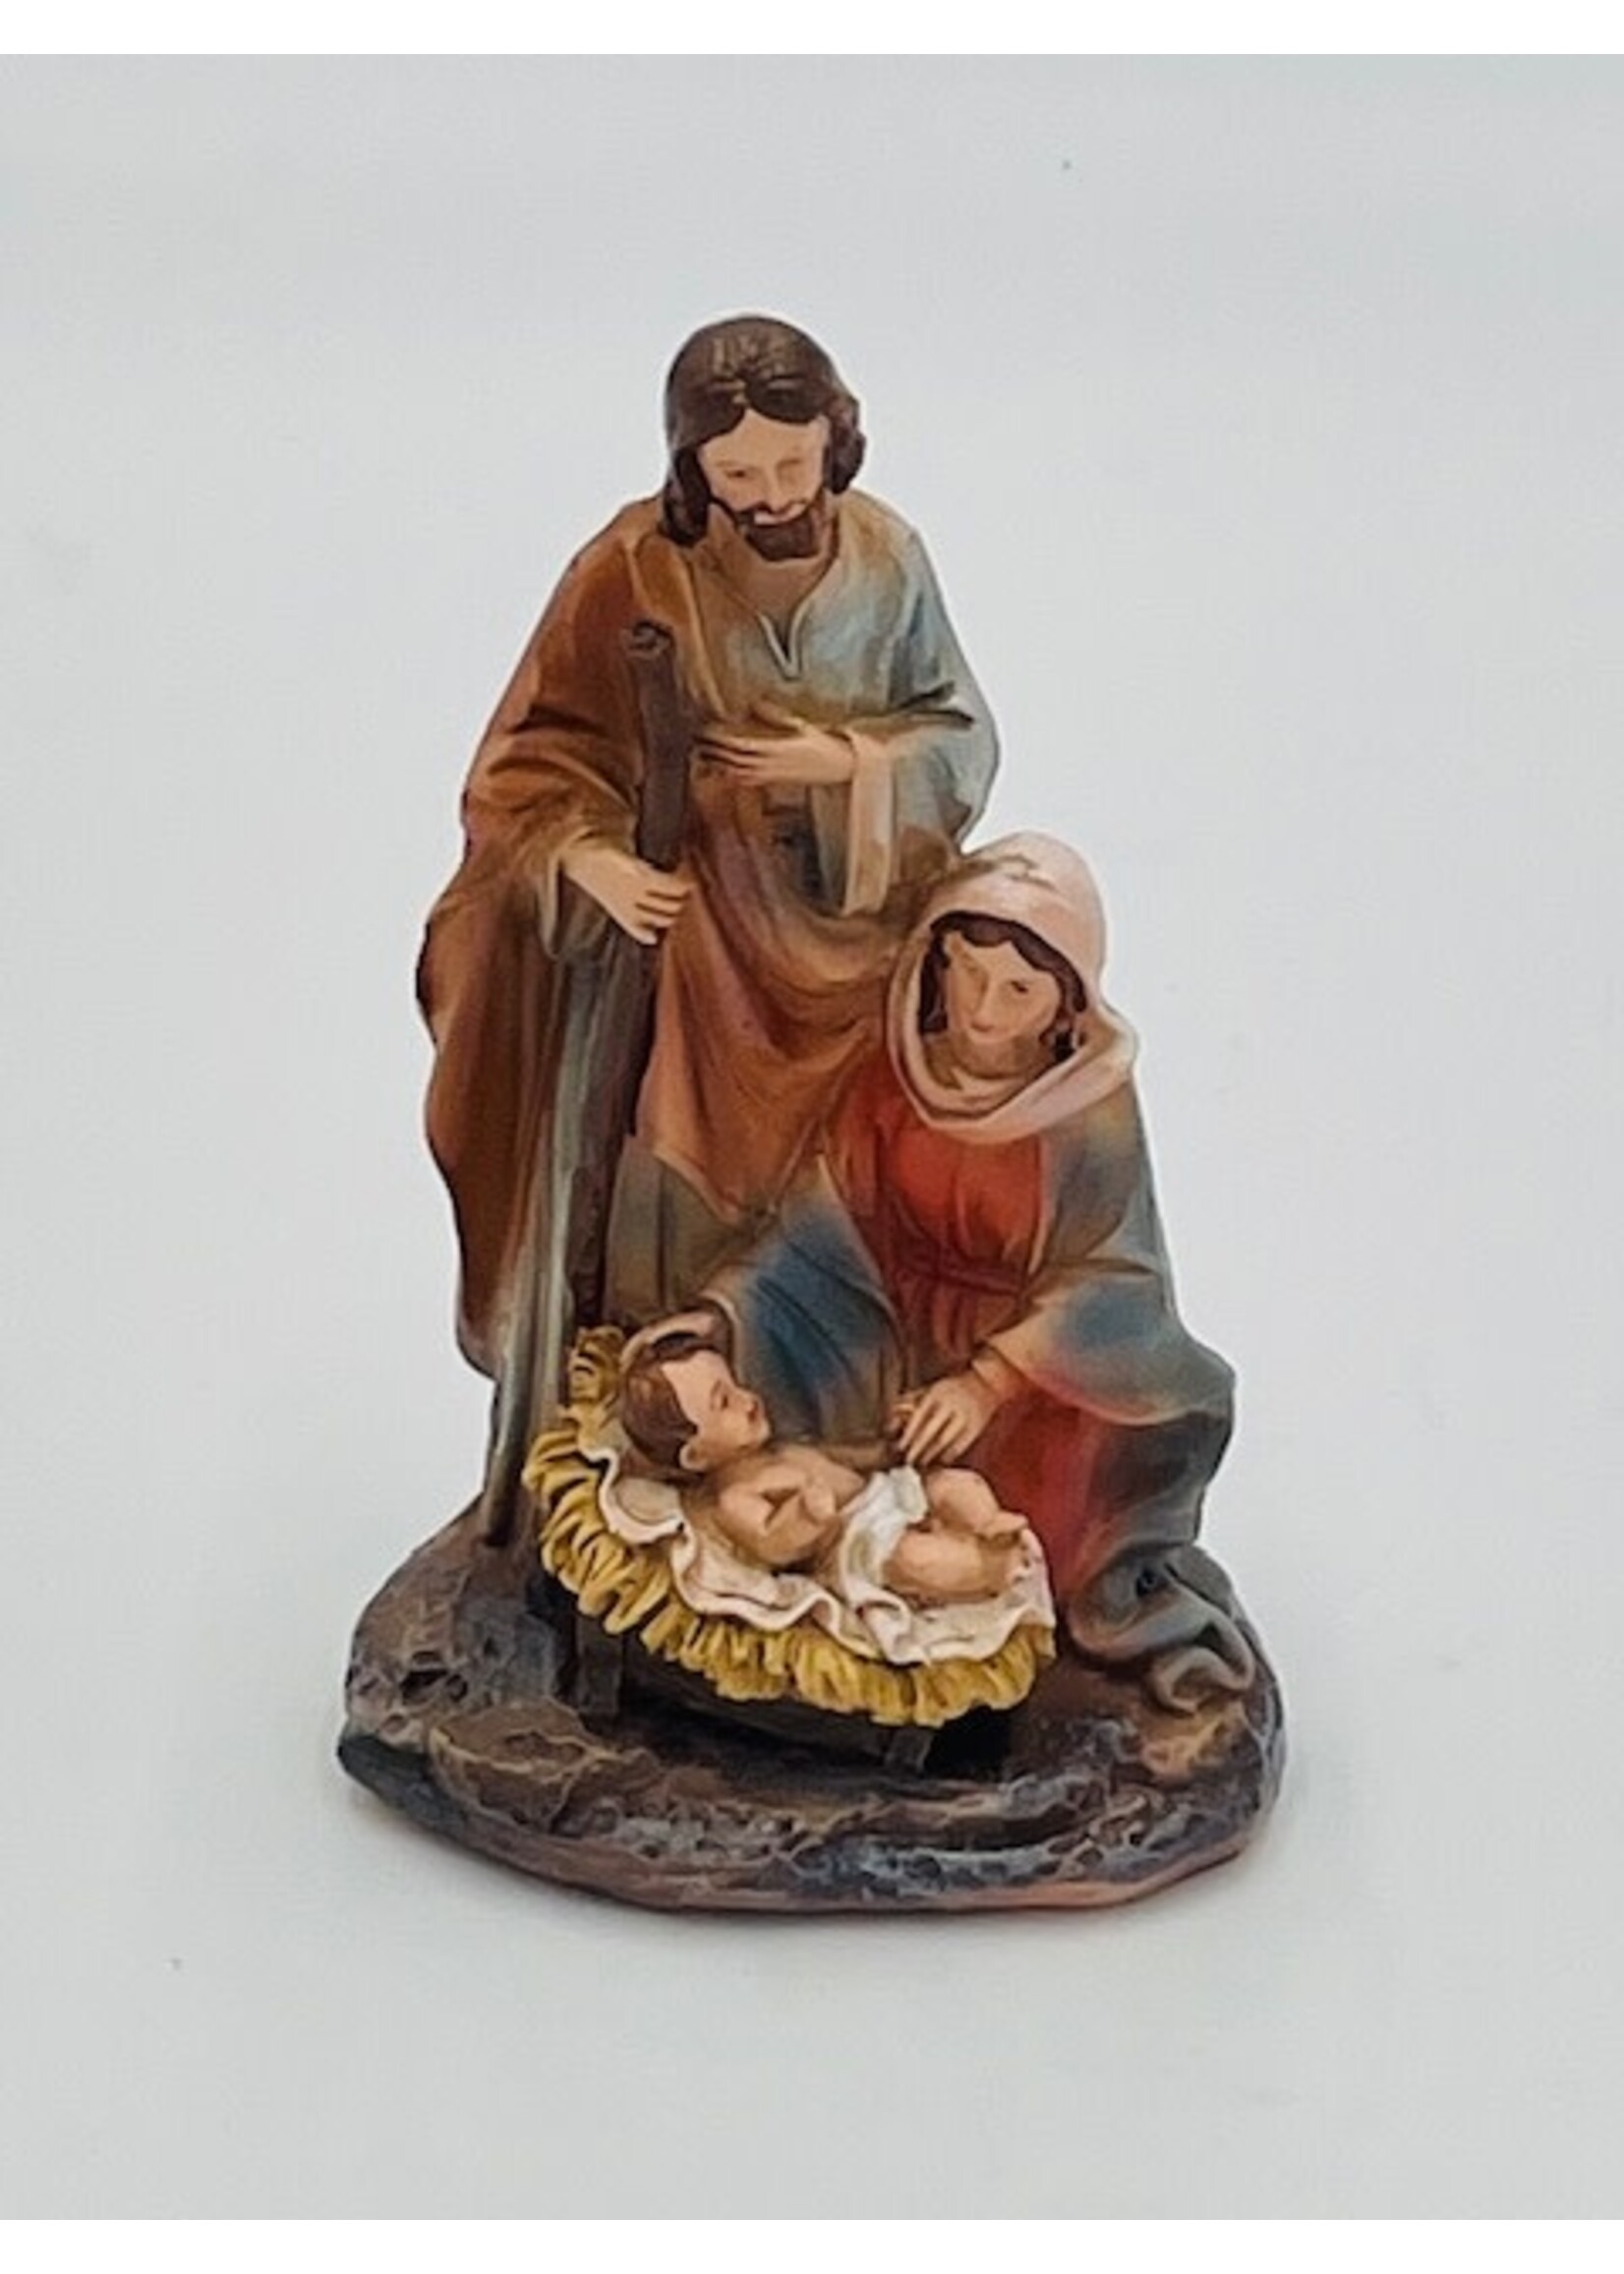 Holy Family Nativity Figurine - 3" x 2.5" x 5"